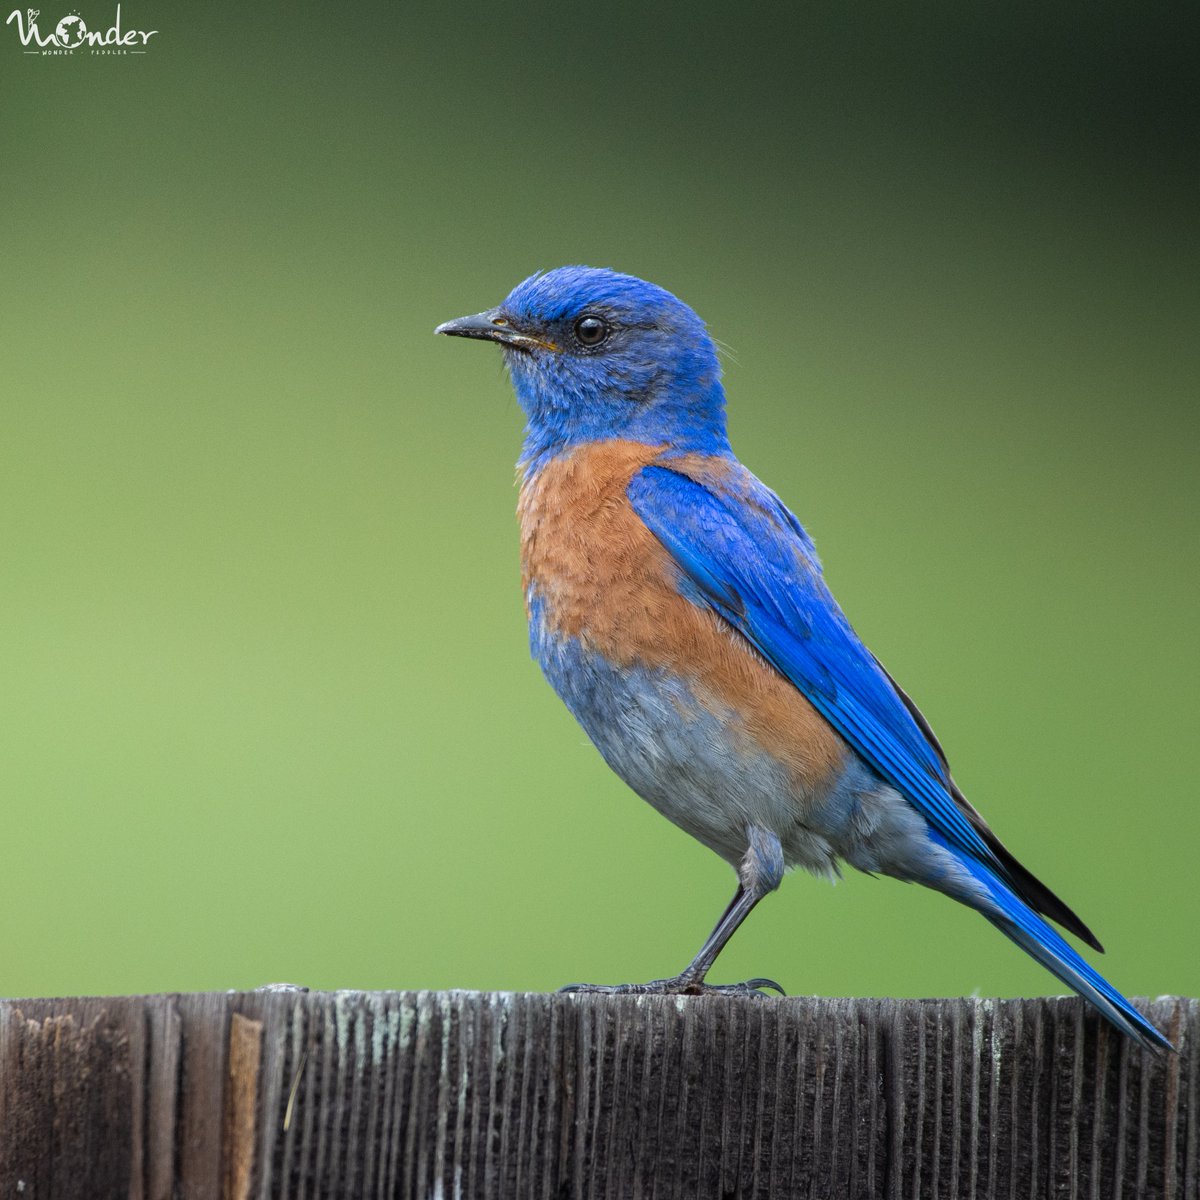 Pretty in blue! #WesternBluebird

#Bluebirds #Nature #Wildlife #Bird #Photography #Birding #California #EarthCapture